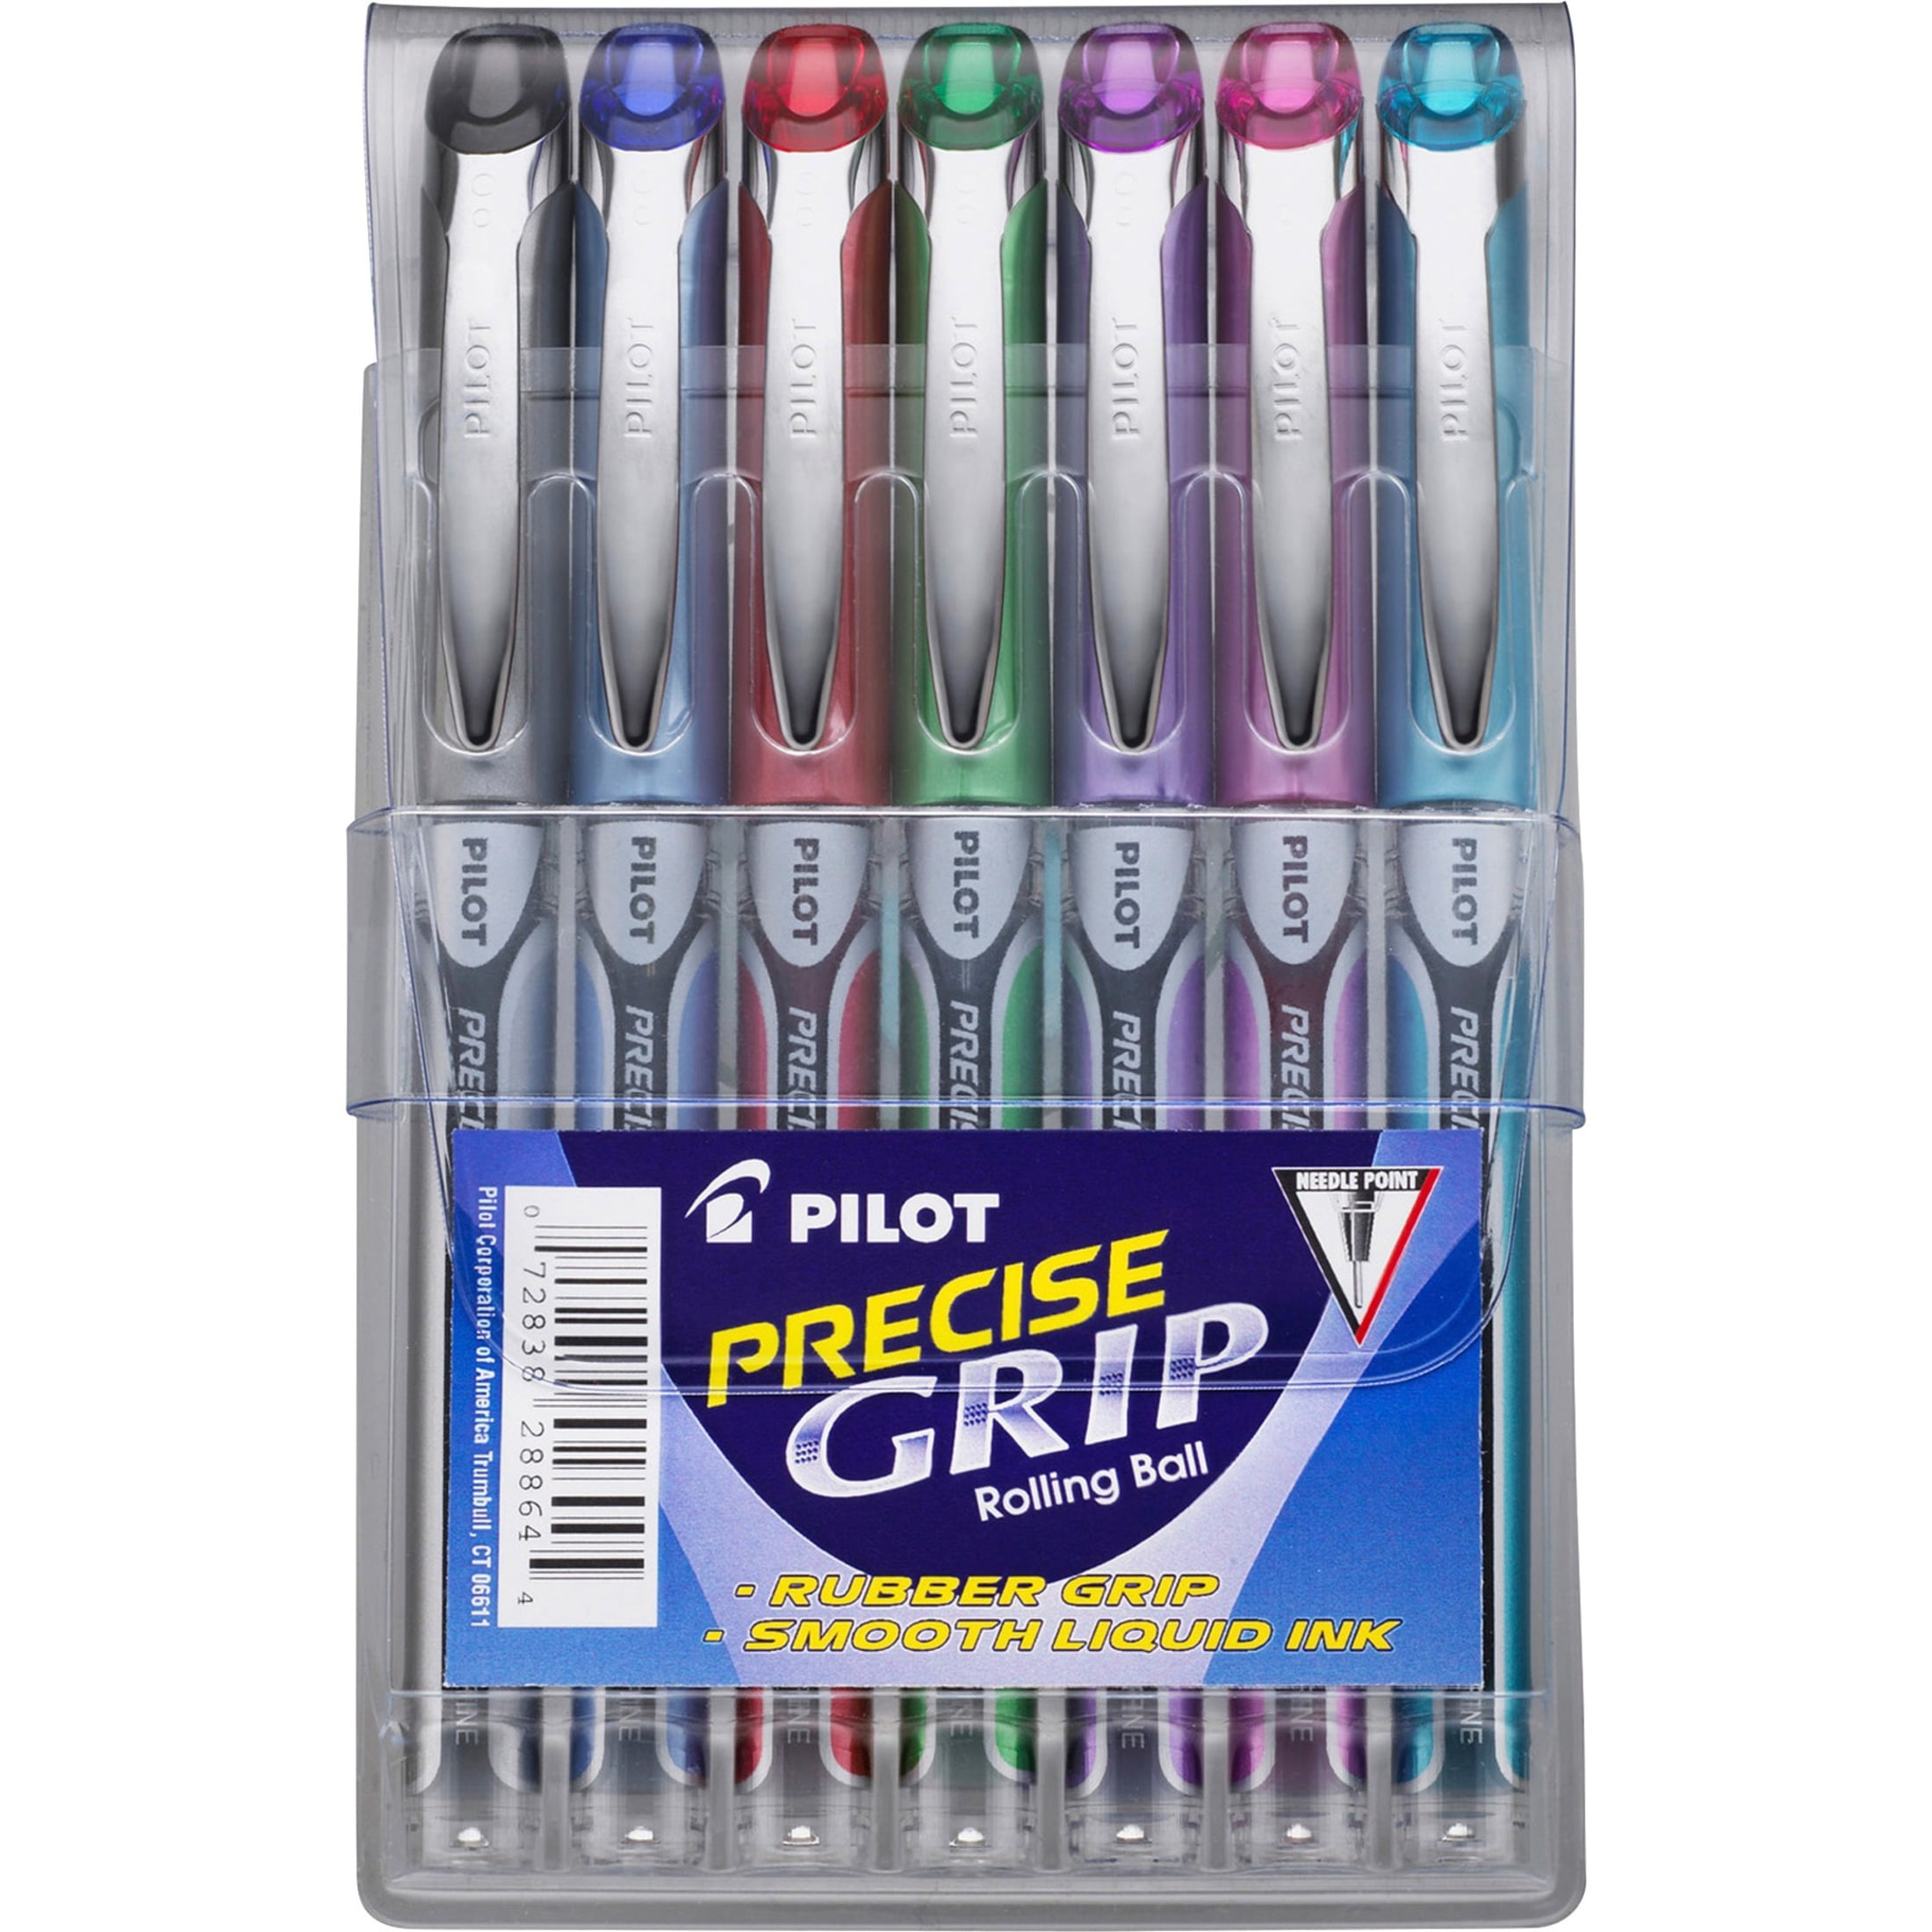 Pilot, PIL28801, Precise Grip Extra-Fine Capped Rolling Ball Pens 